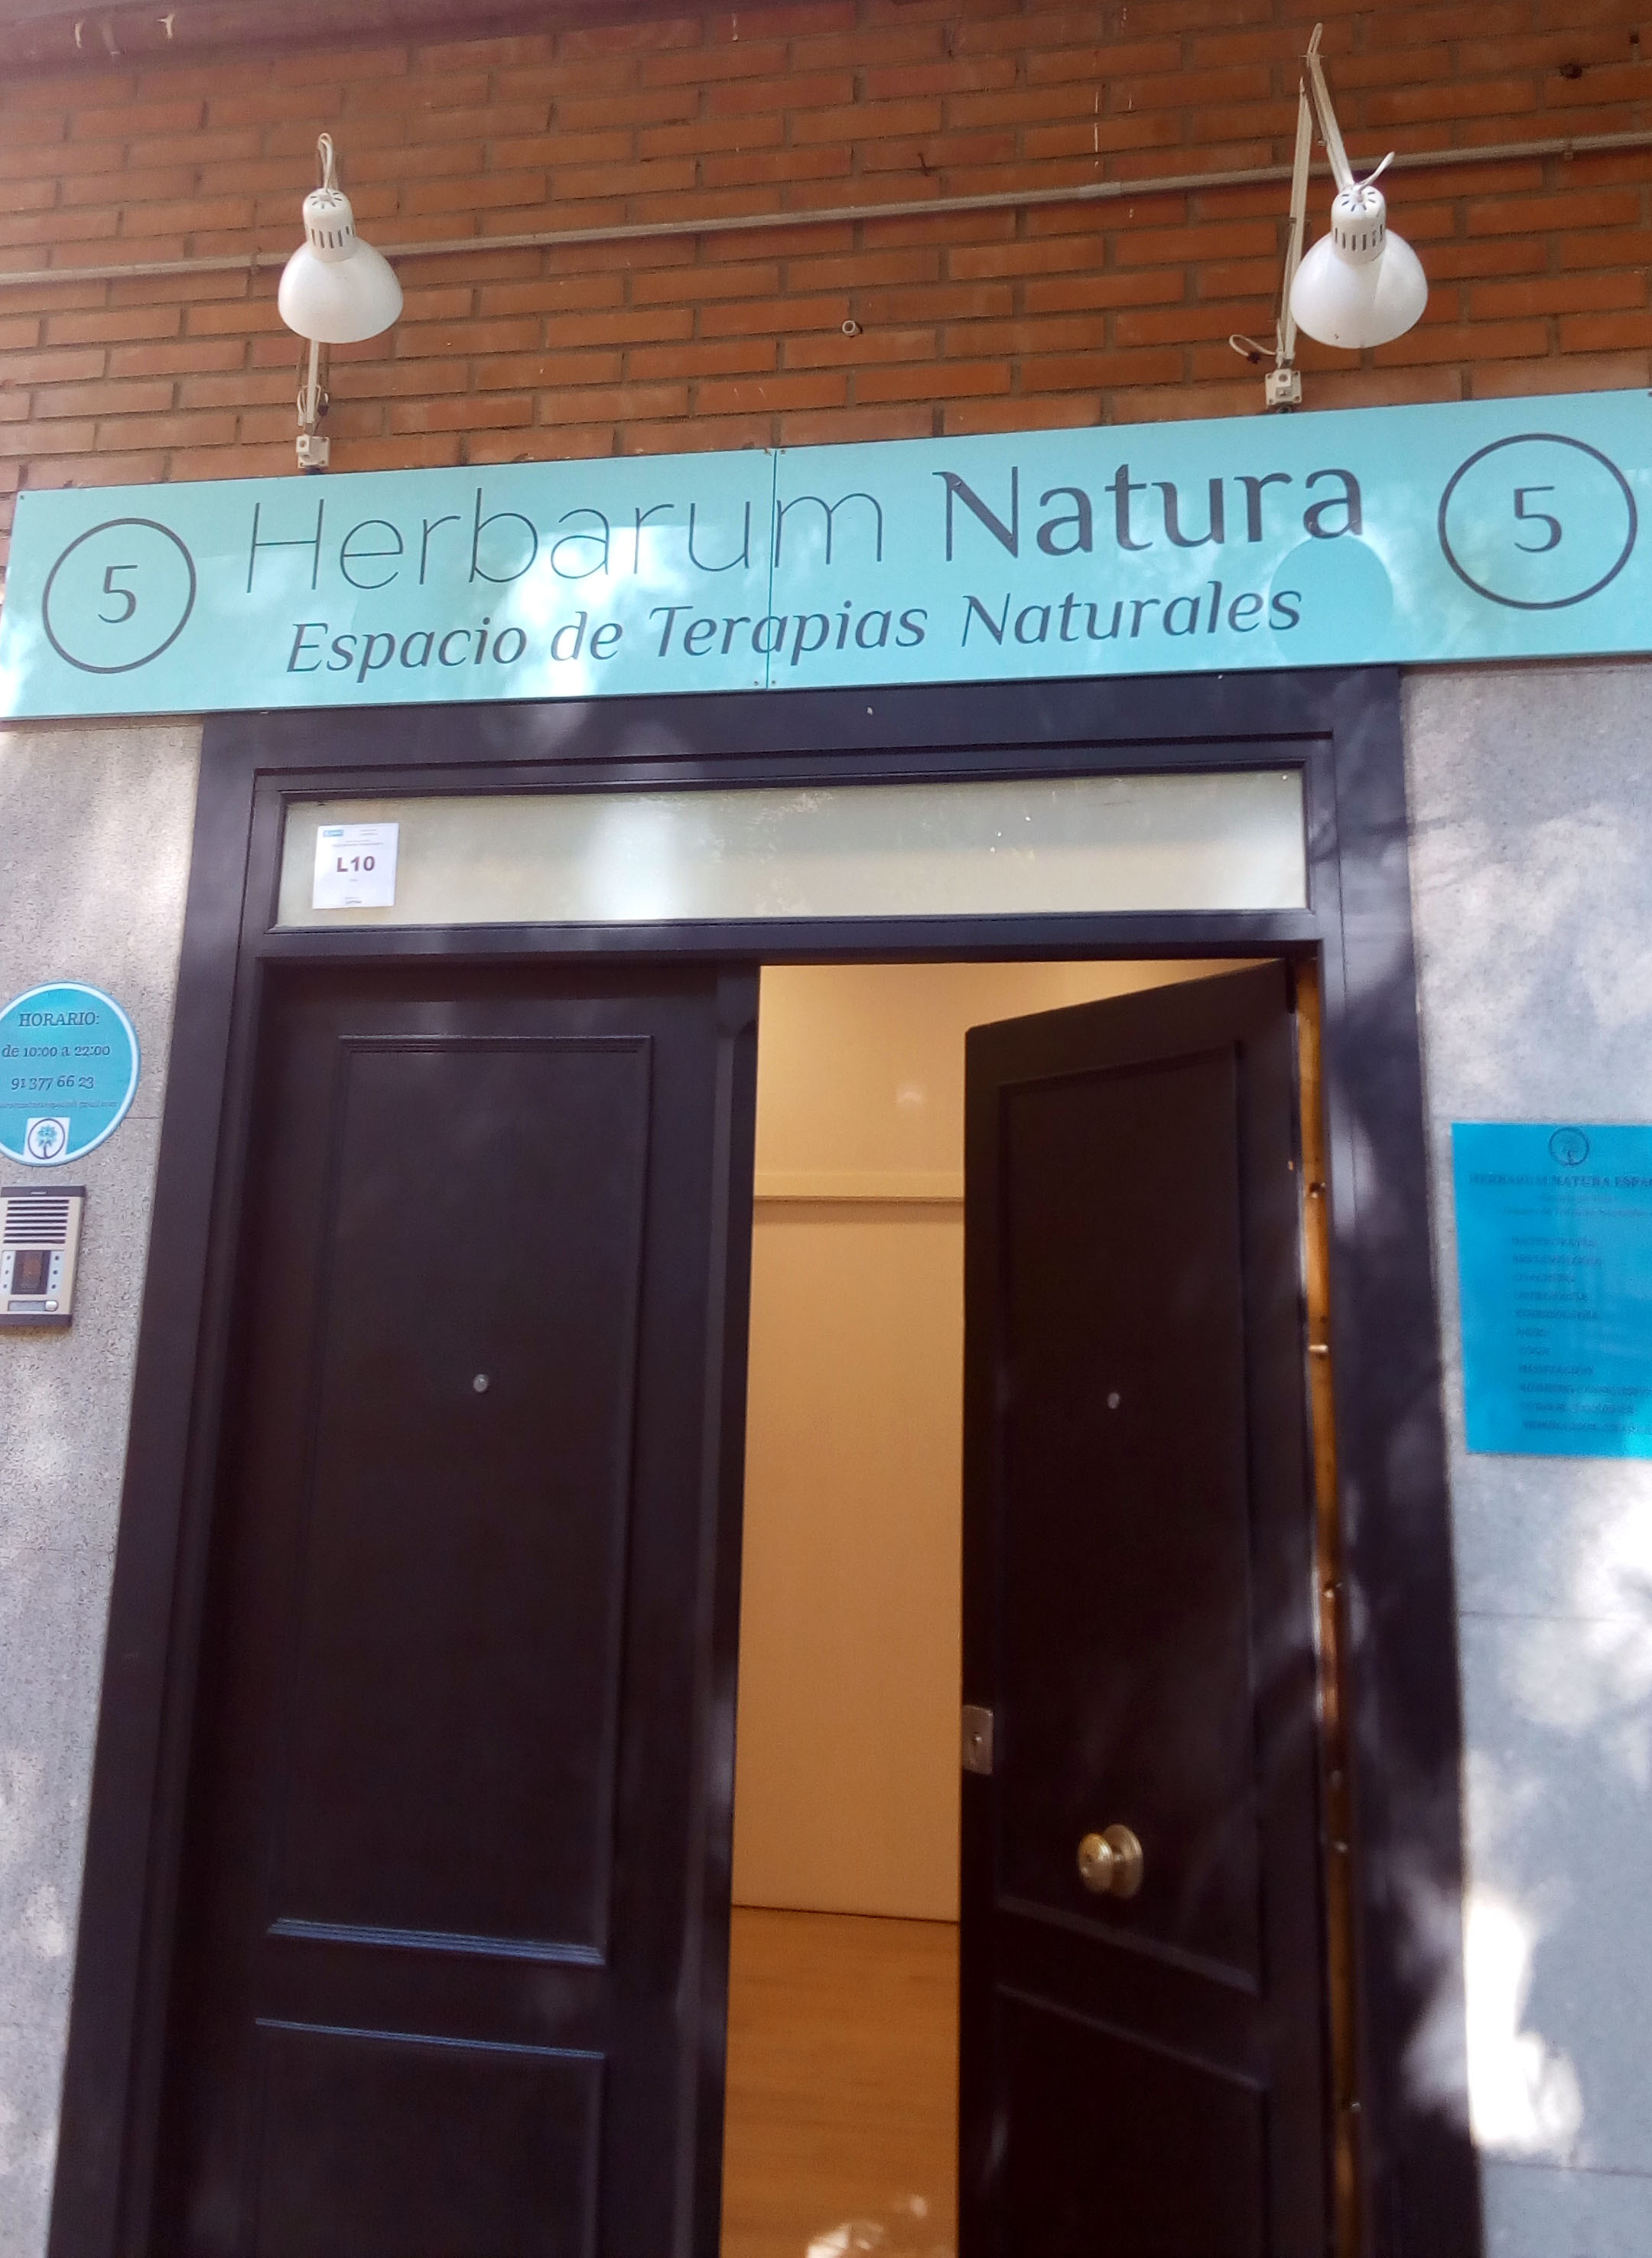 Herbarum Natura Espacio